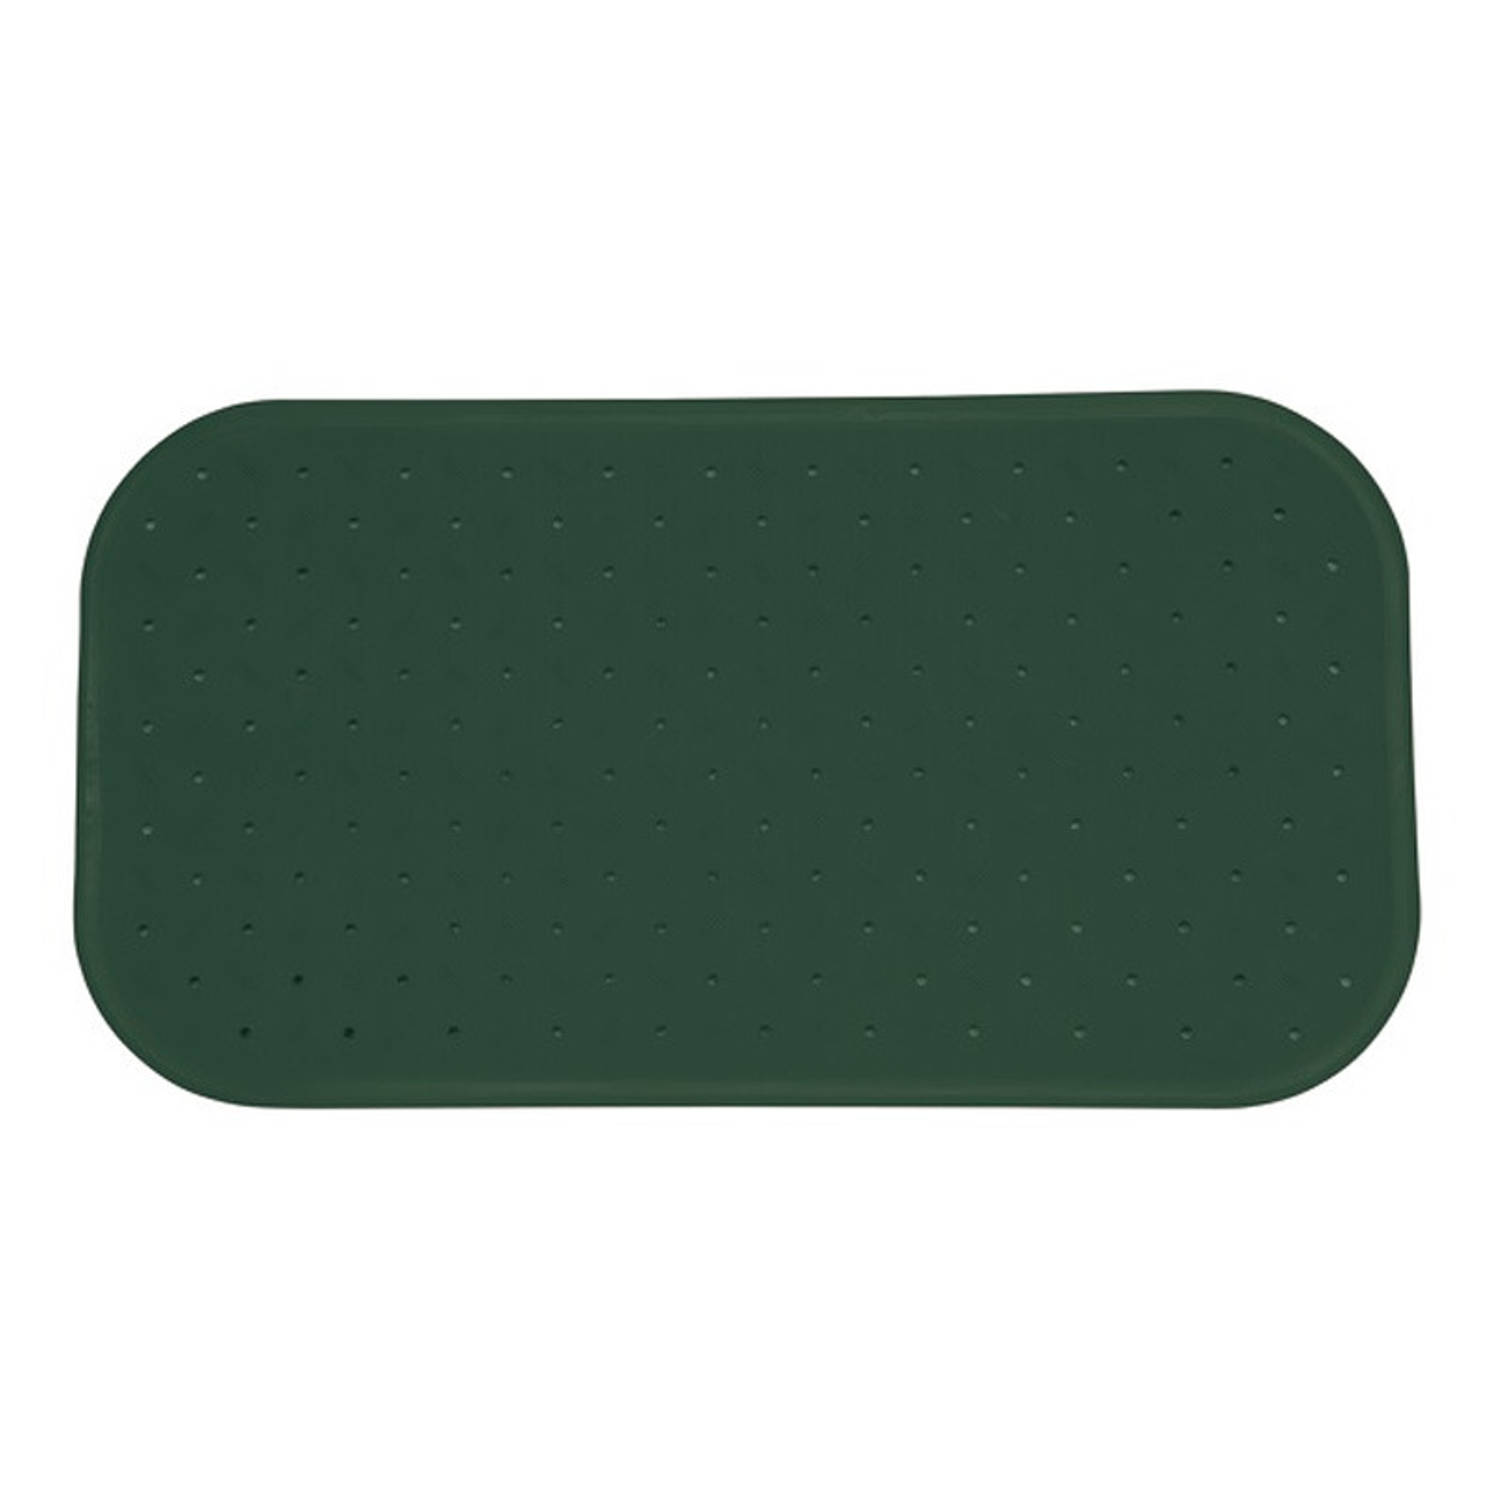 MSV Douche-bad anti-slip mat badkamer rubber groen 36 x 97 cm Badmatjes